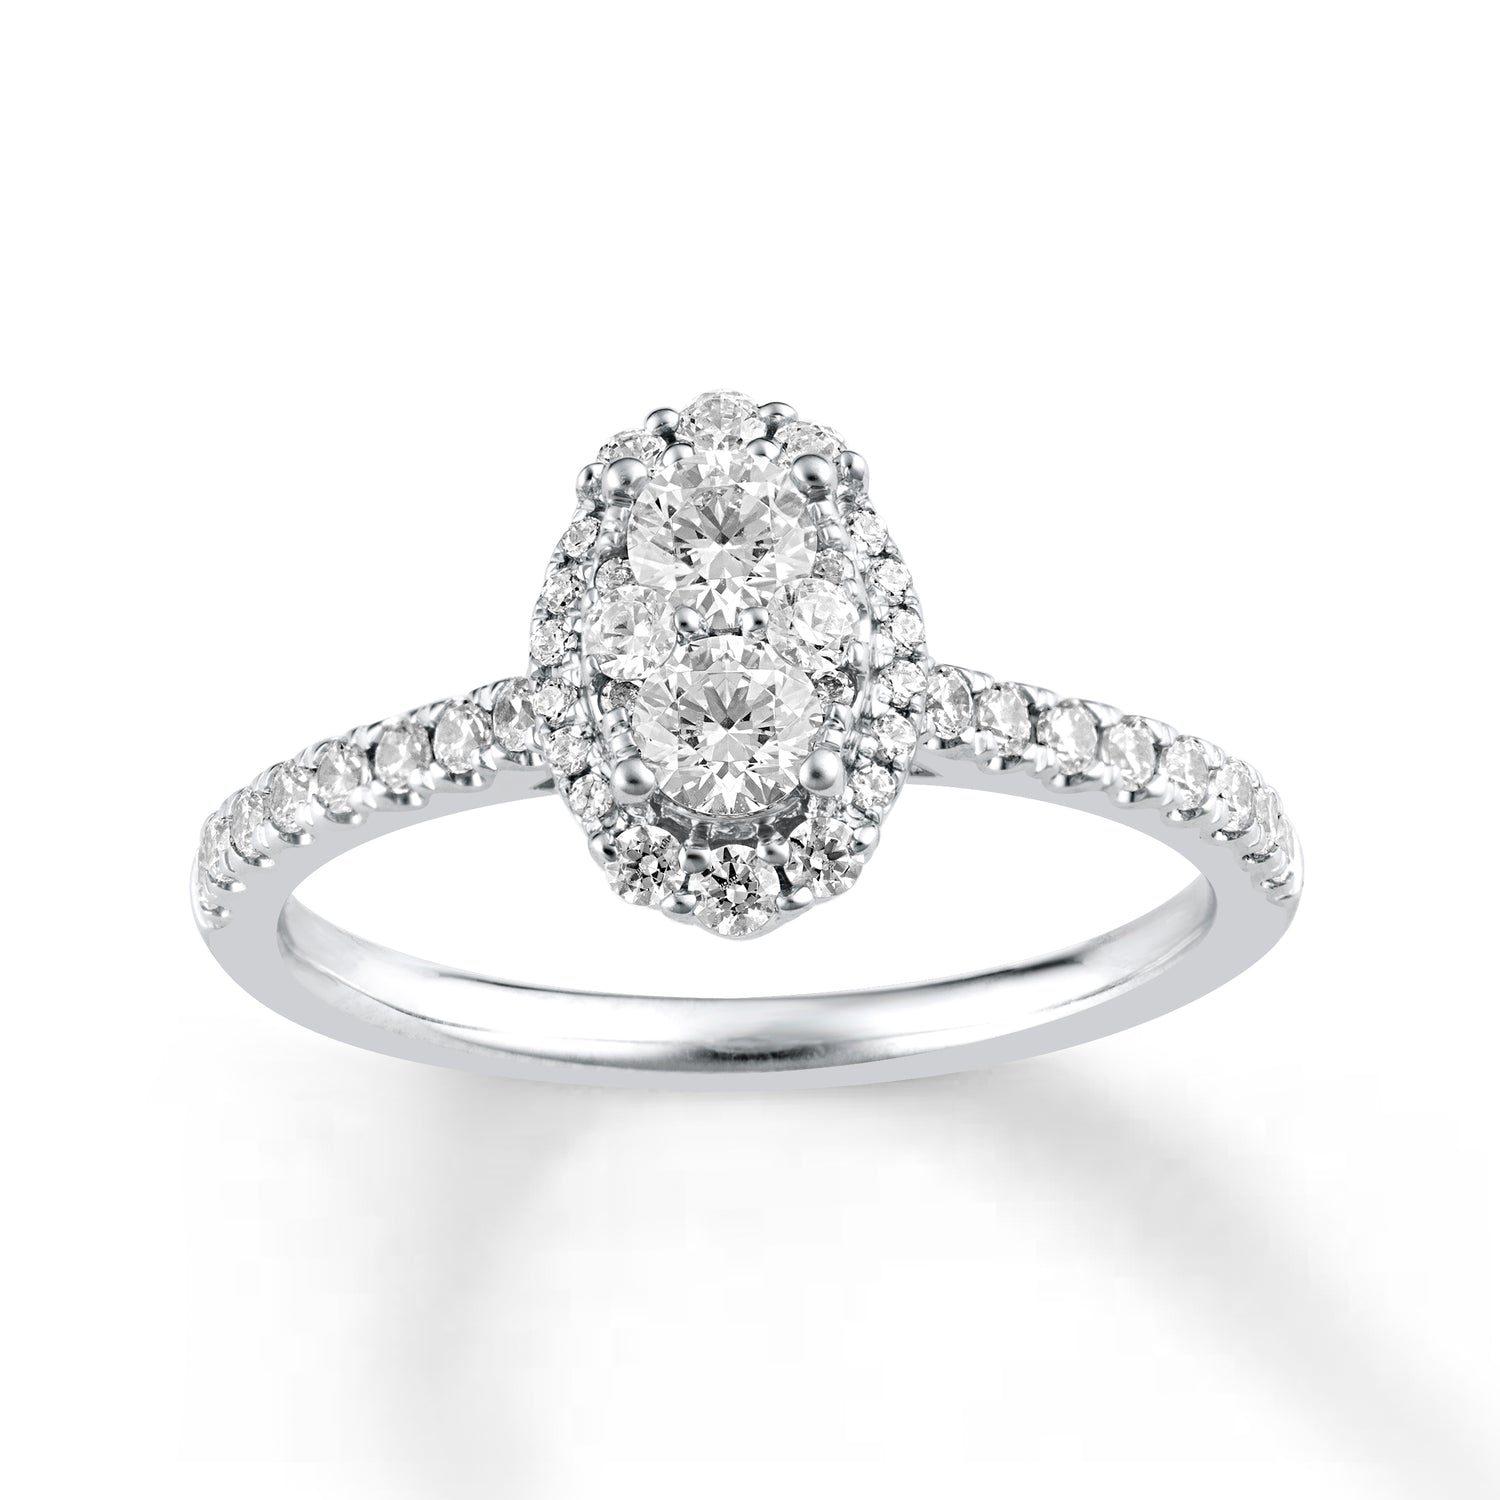 Diamond ring oval engagement bridal